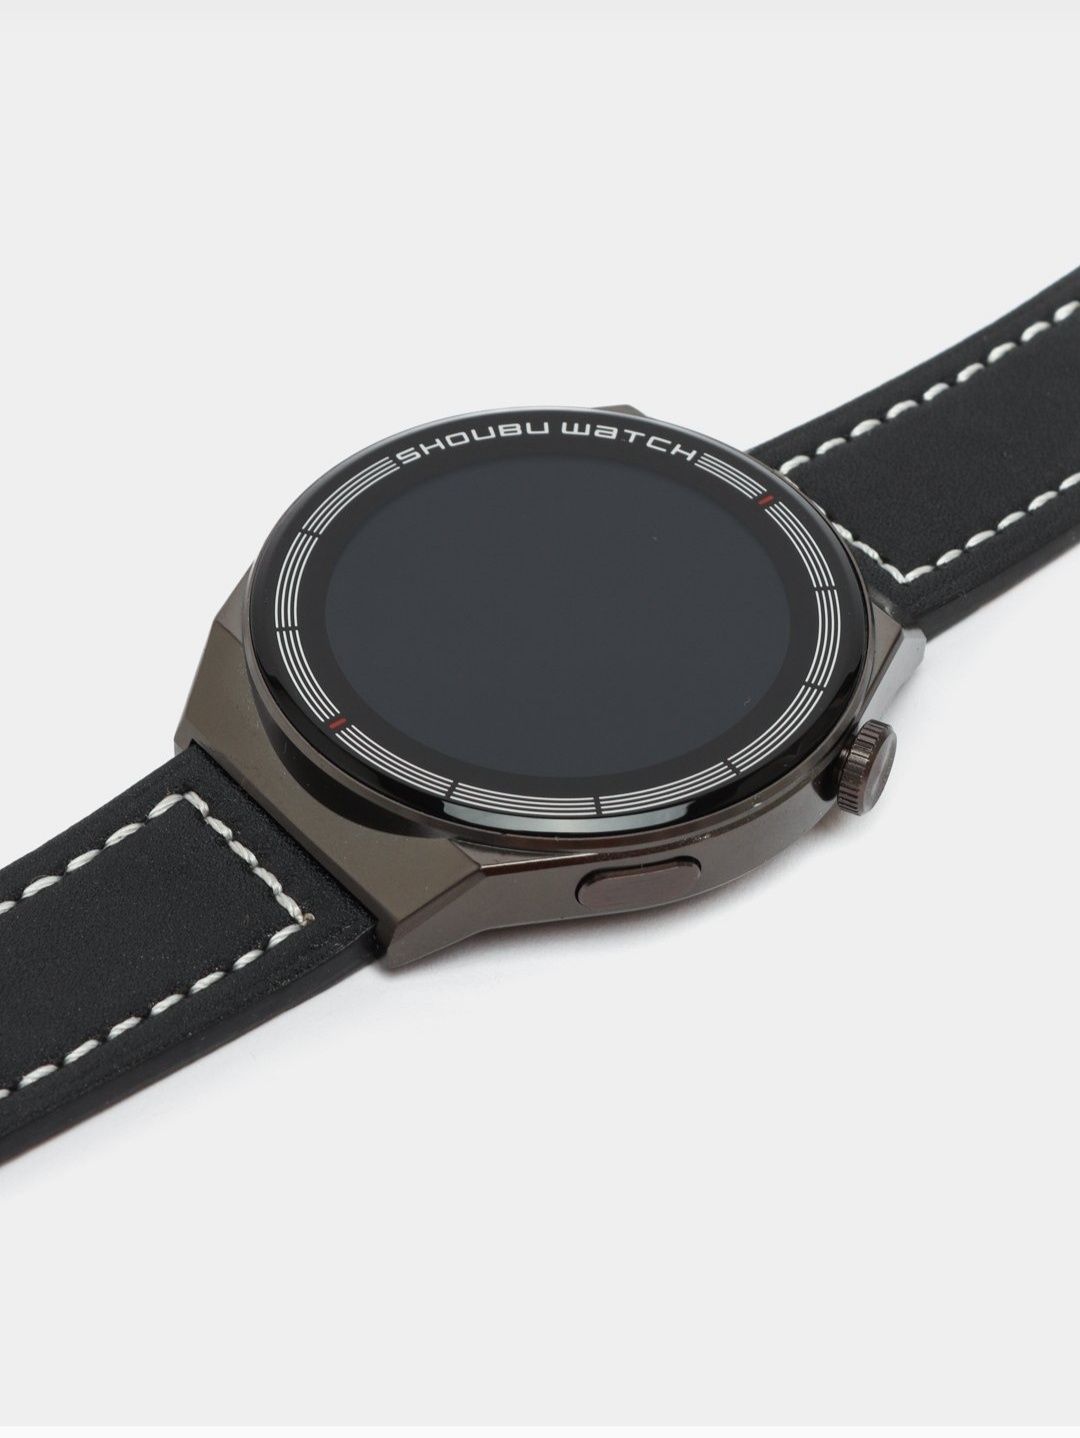 New Smart watch Sport aqilli soati, Умный Смарт часы